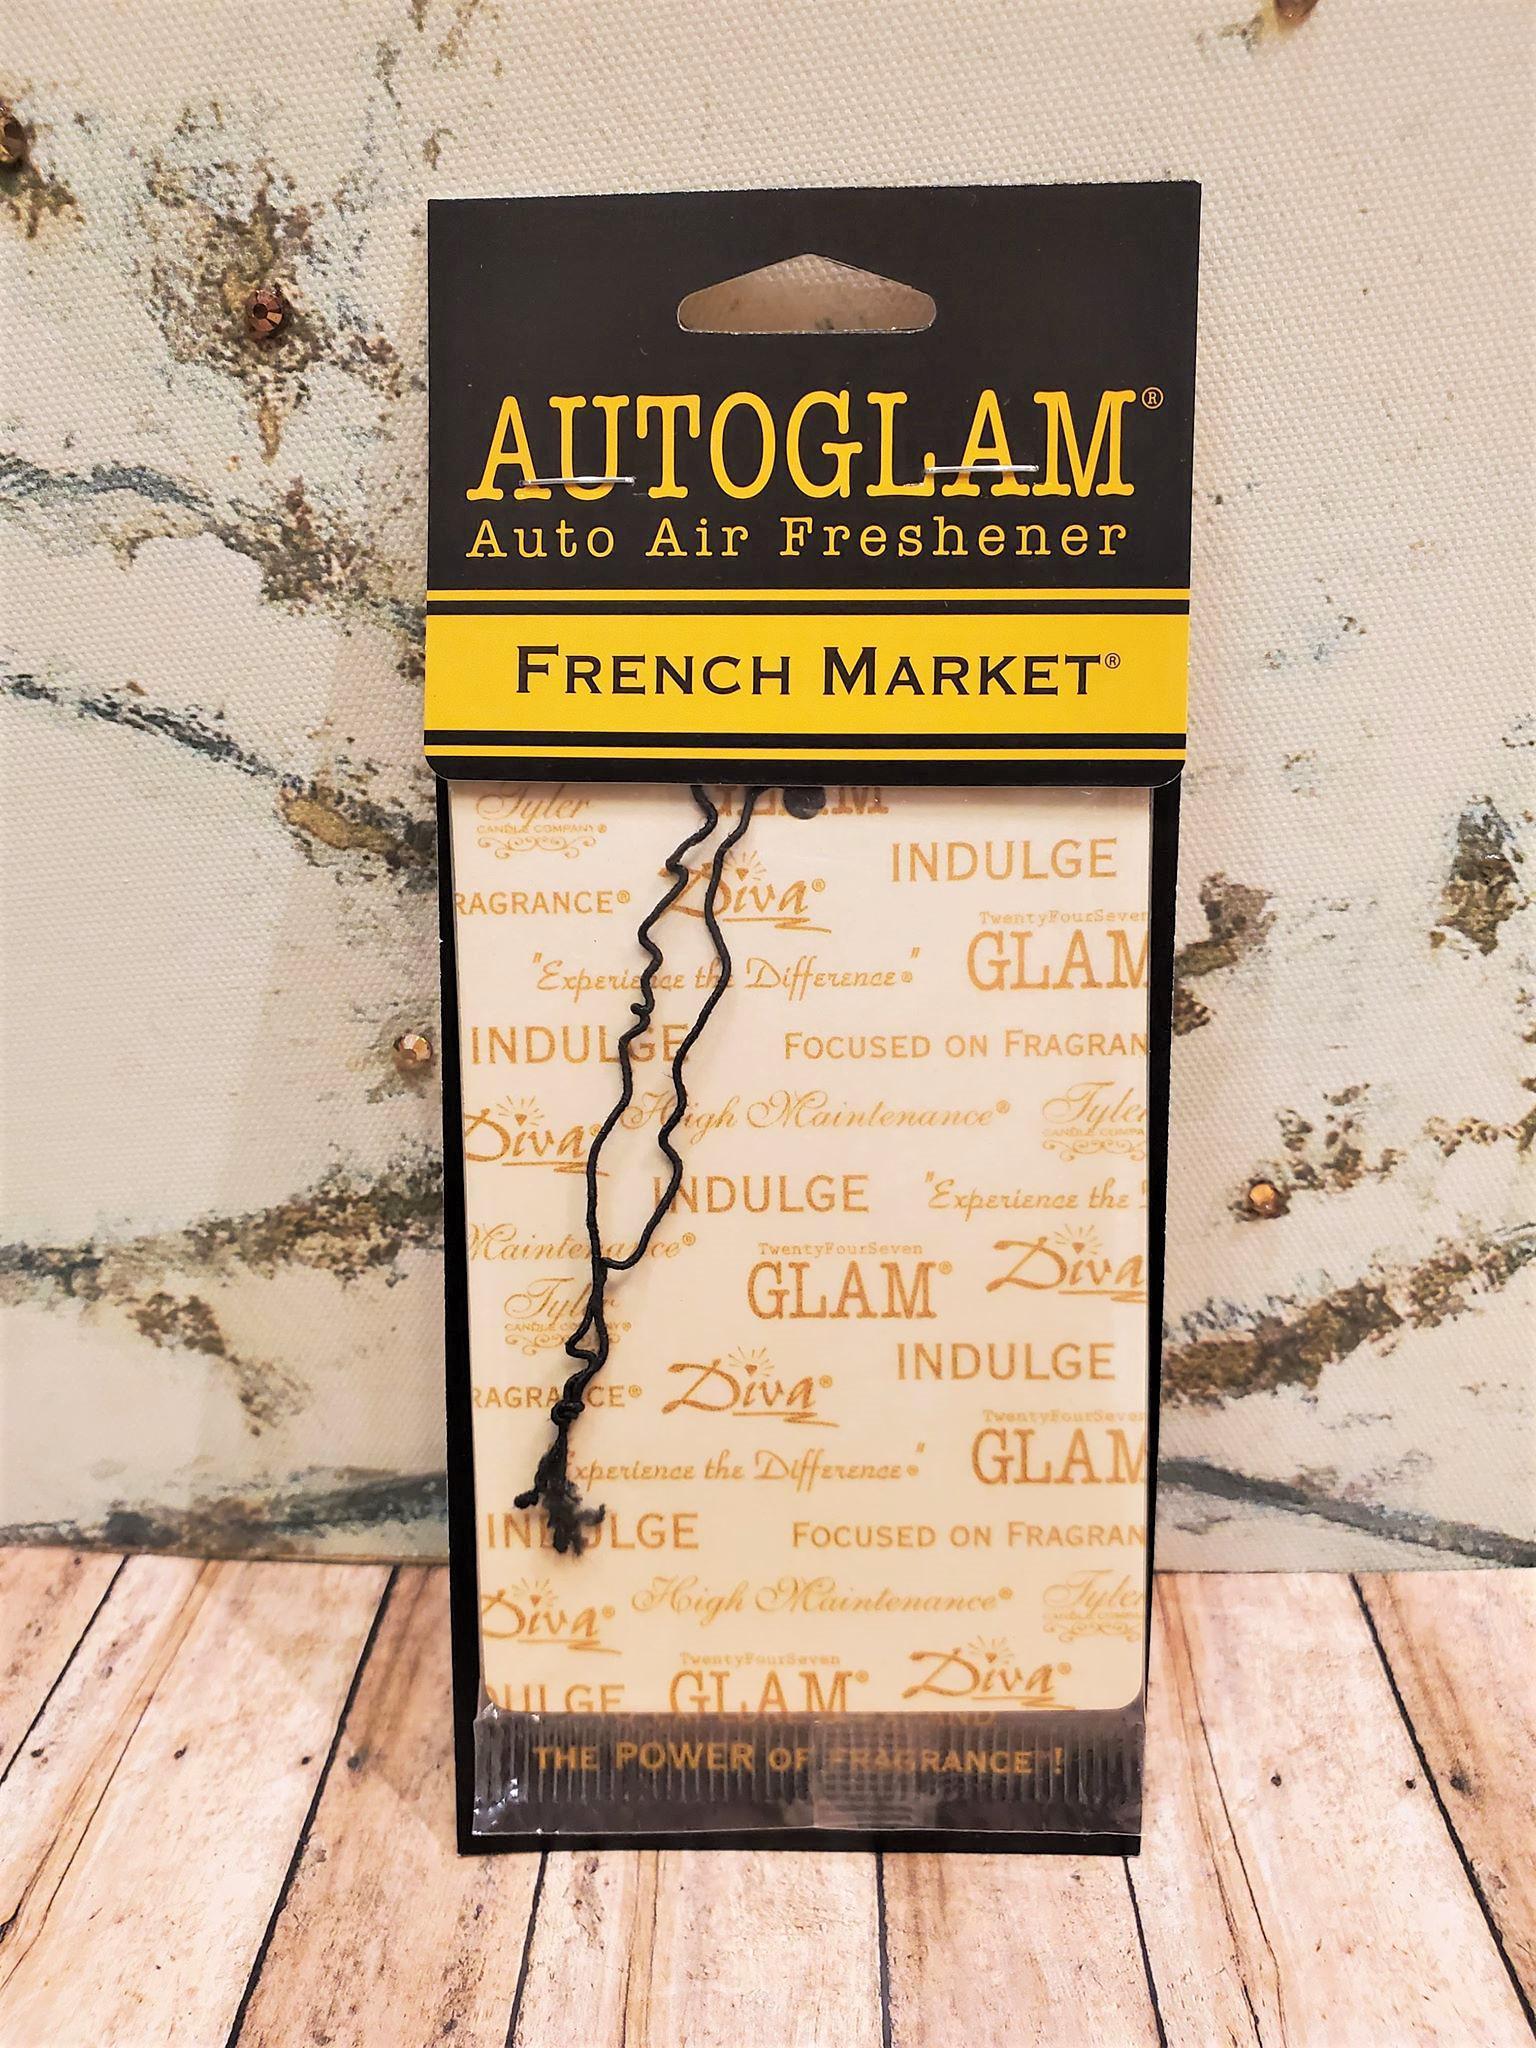 Auto Glam French Market